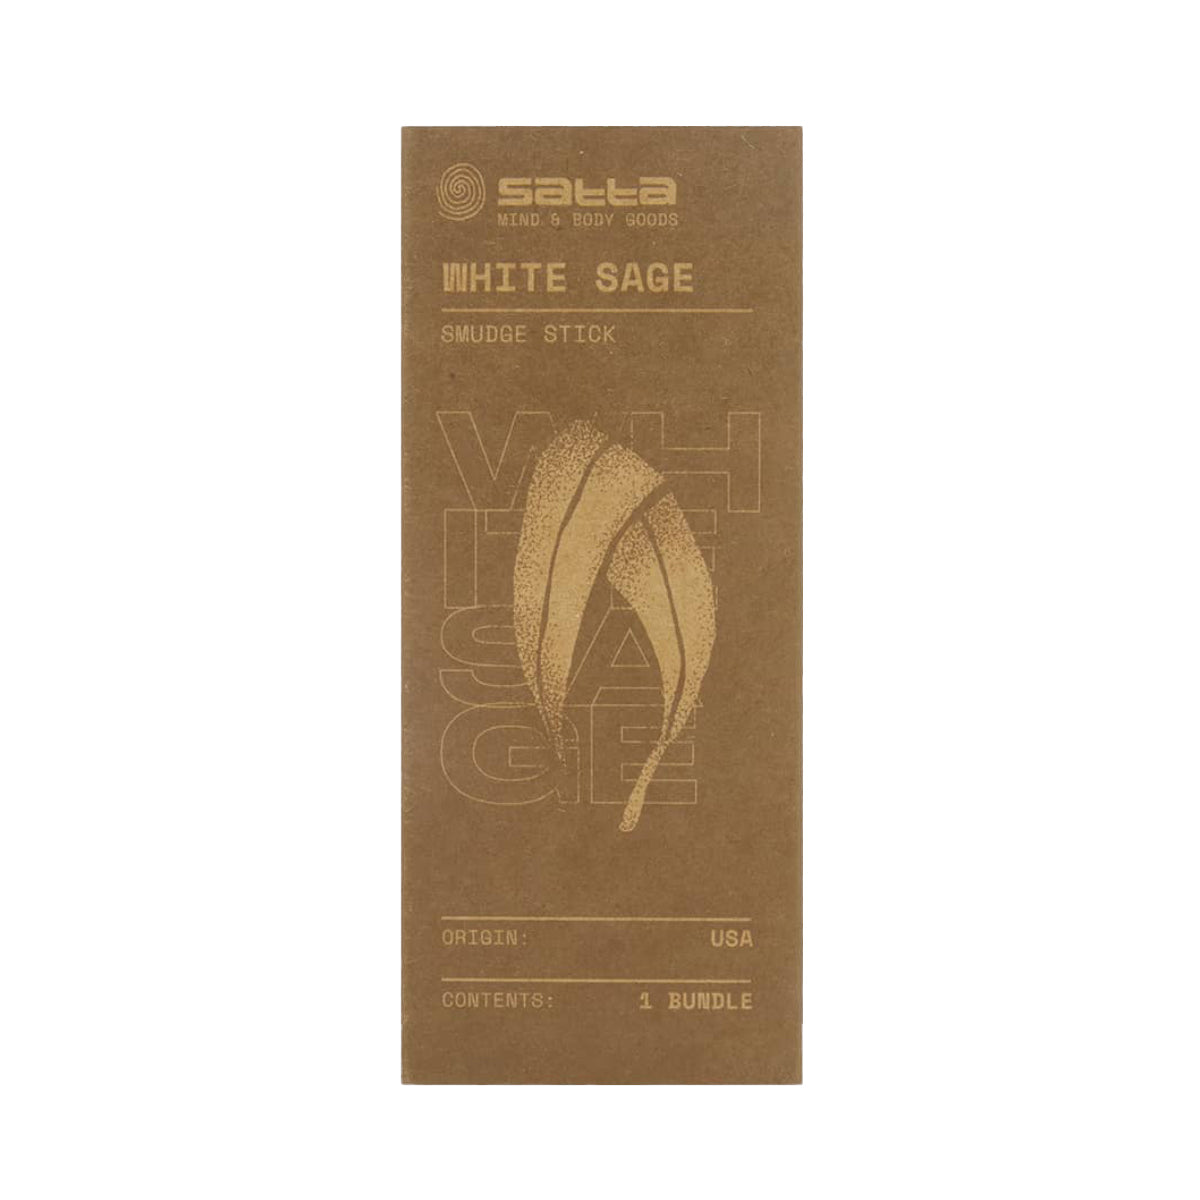 Satta - Satta - White Sage - Incense